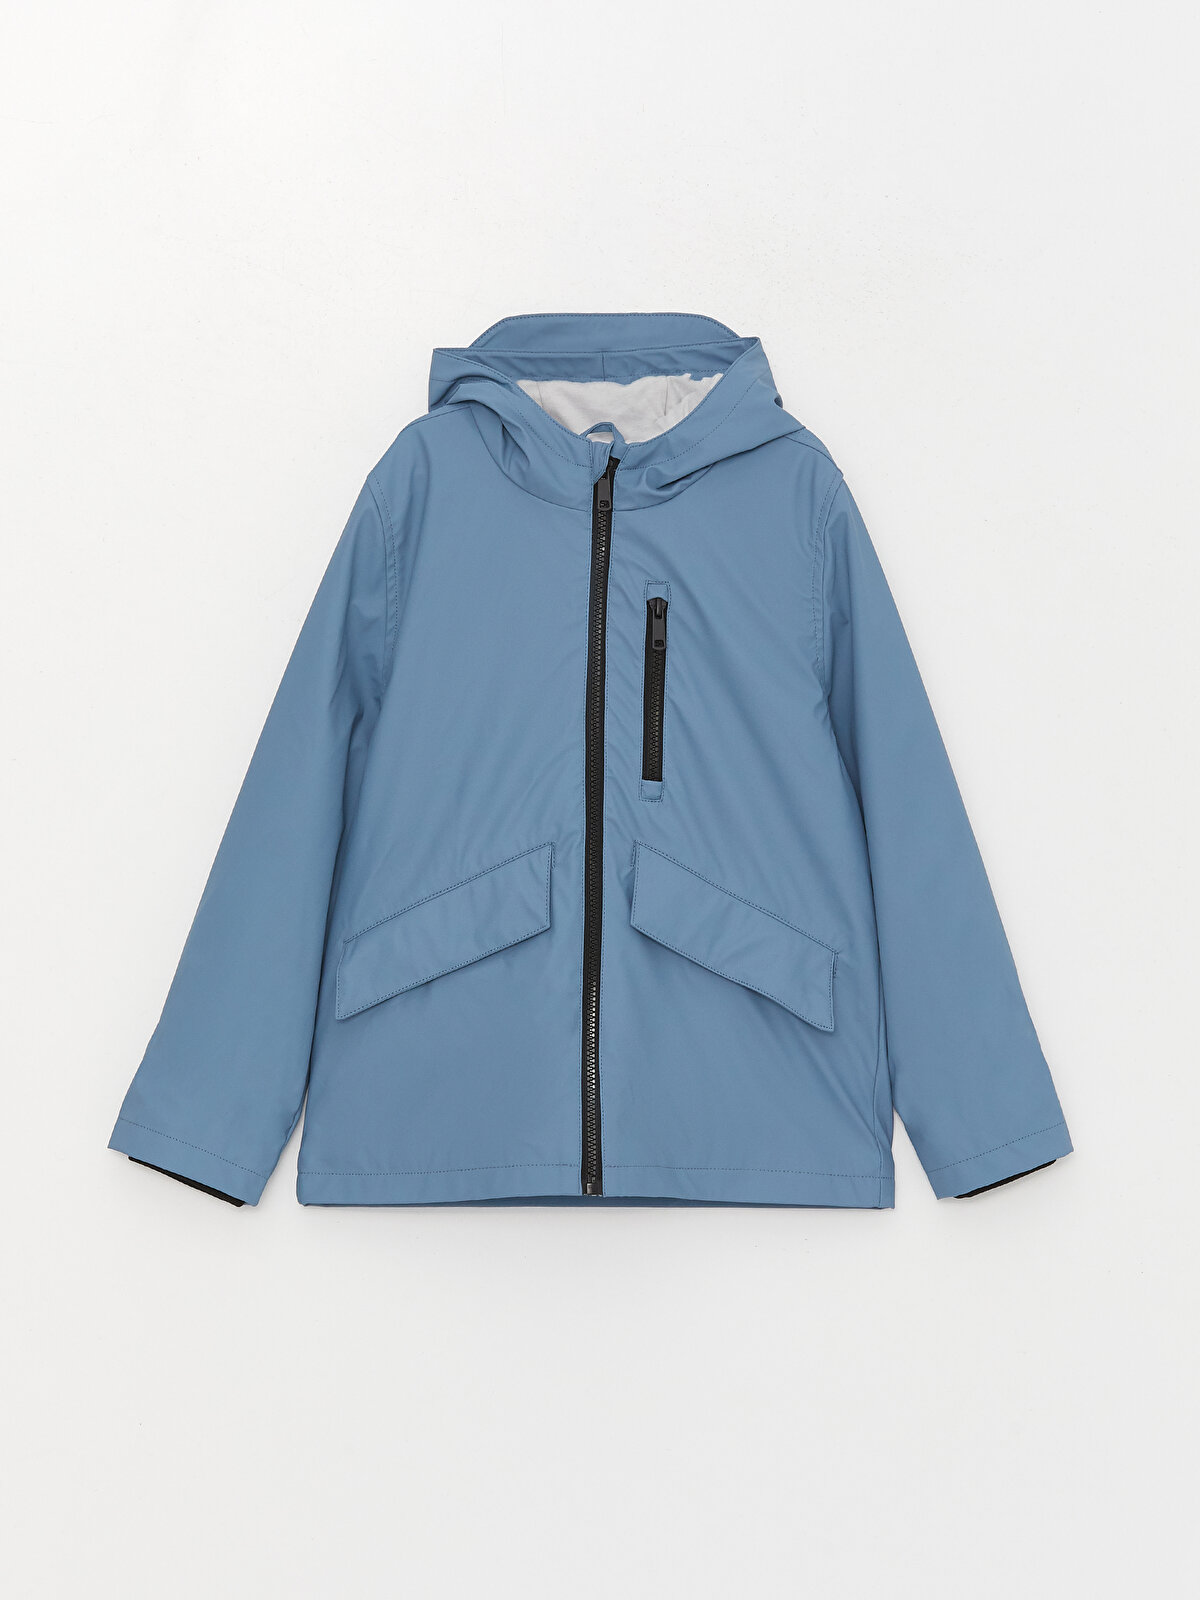 Boy's Hooded Raincoat -W30254Z4-R2T - W30254Z4-R2T - LC 